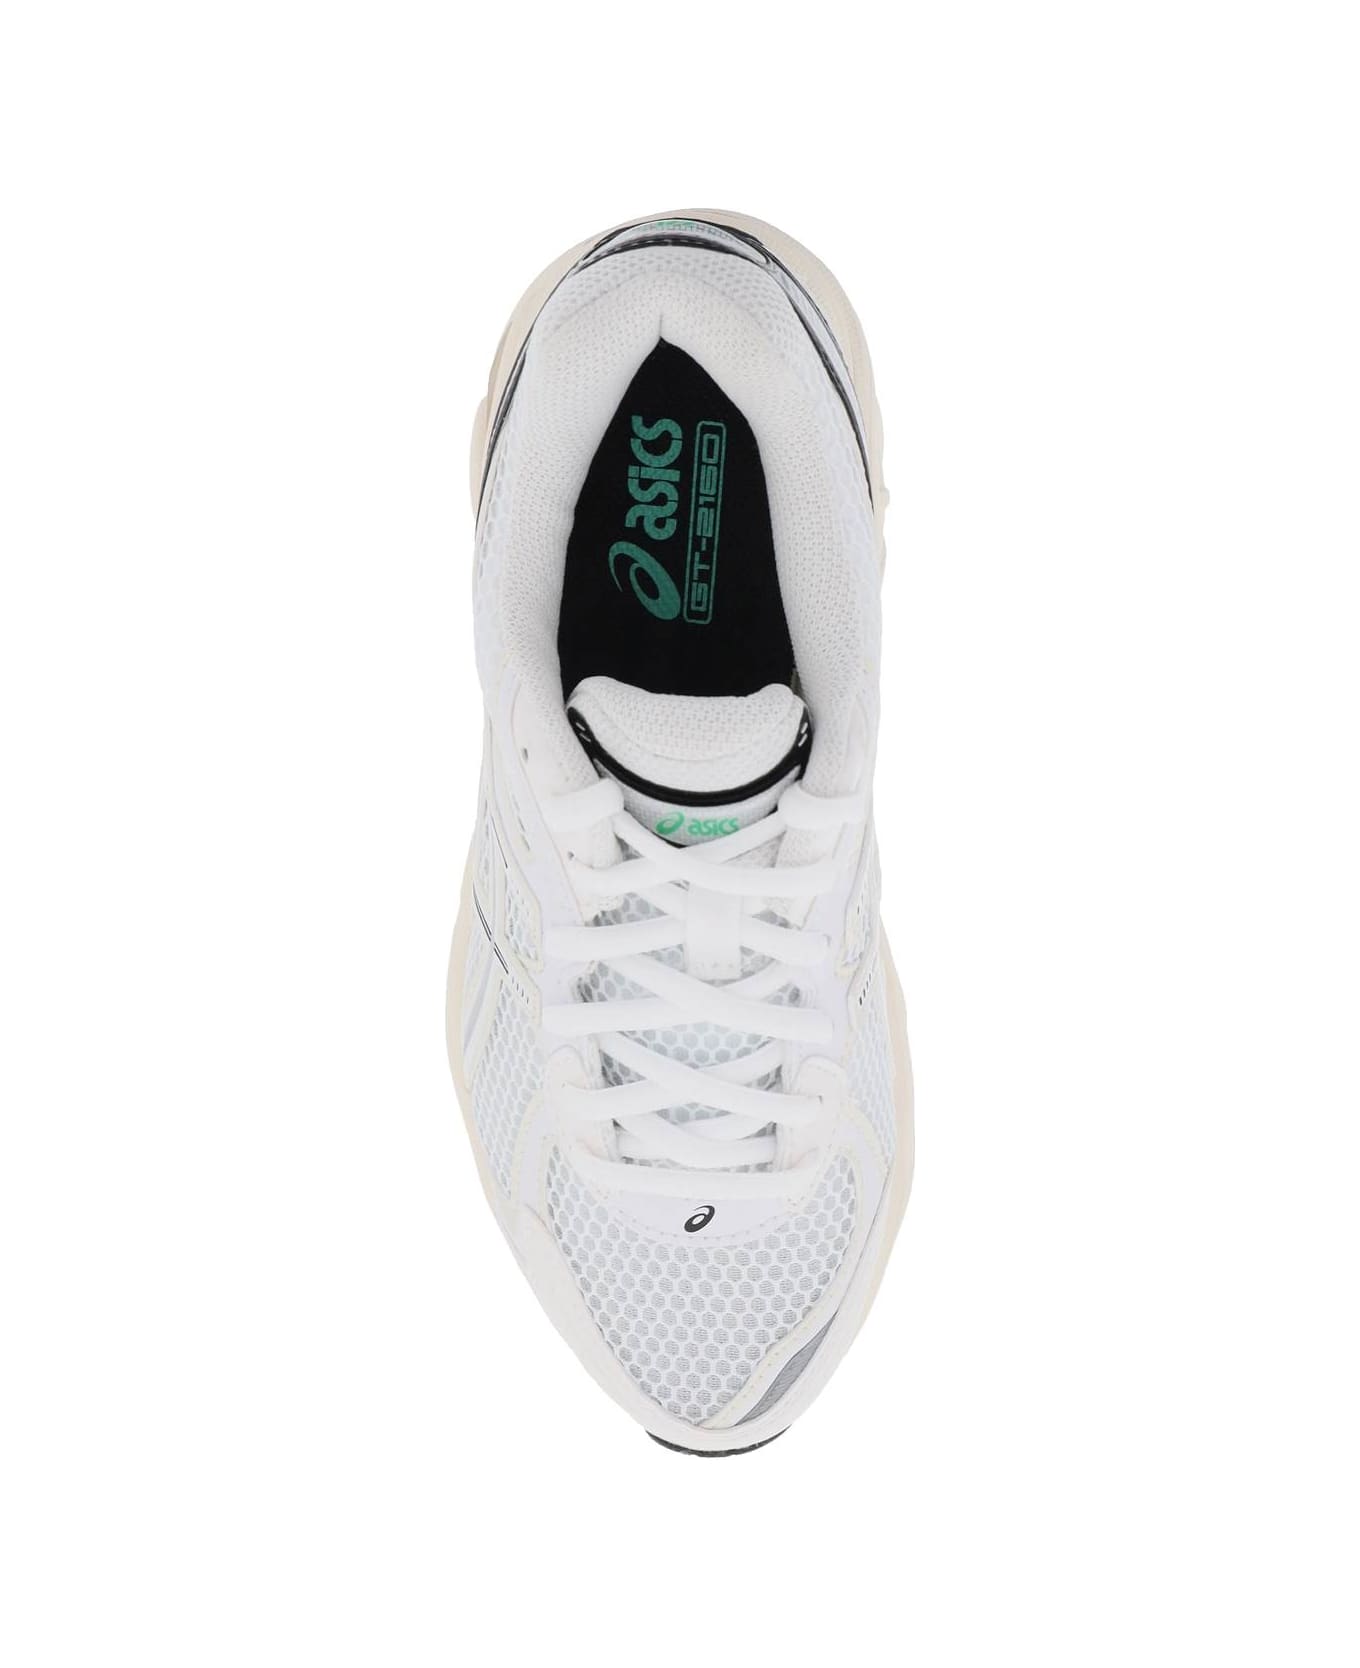 Asics Gt-2160 Sneakers - WHITE BLACK (White)